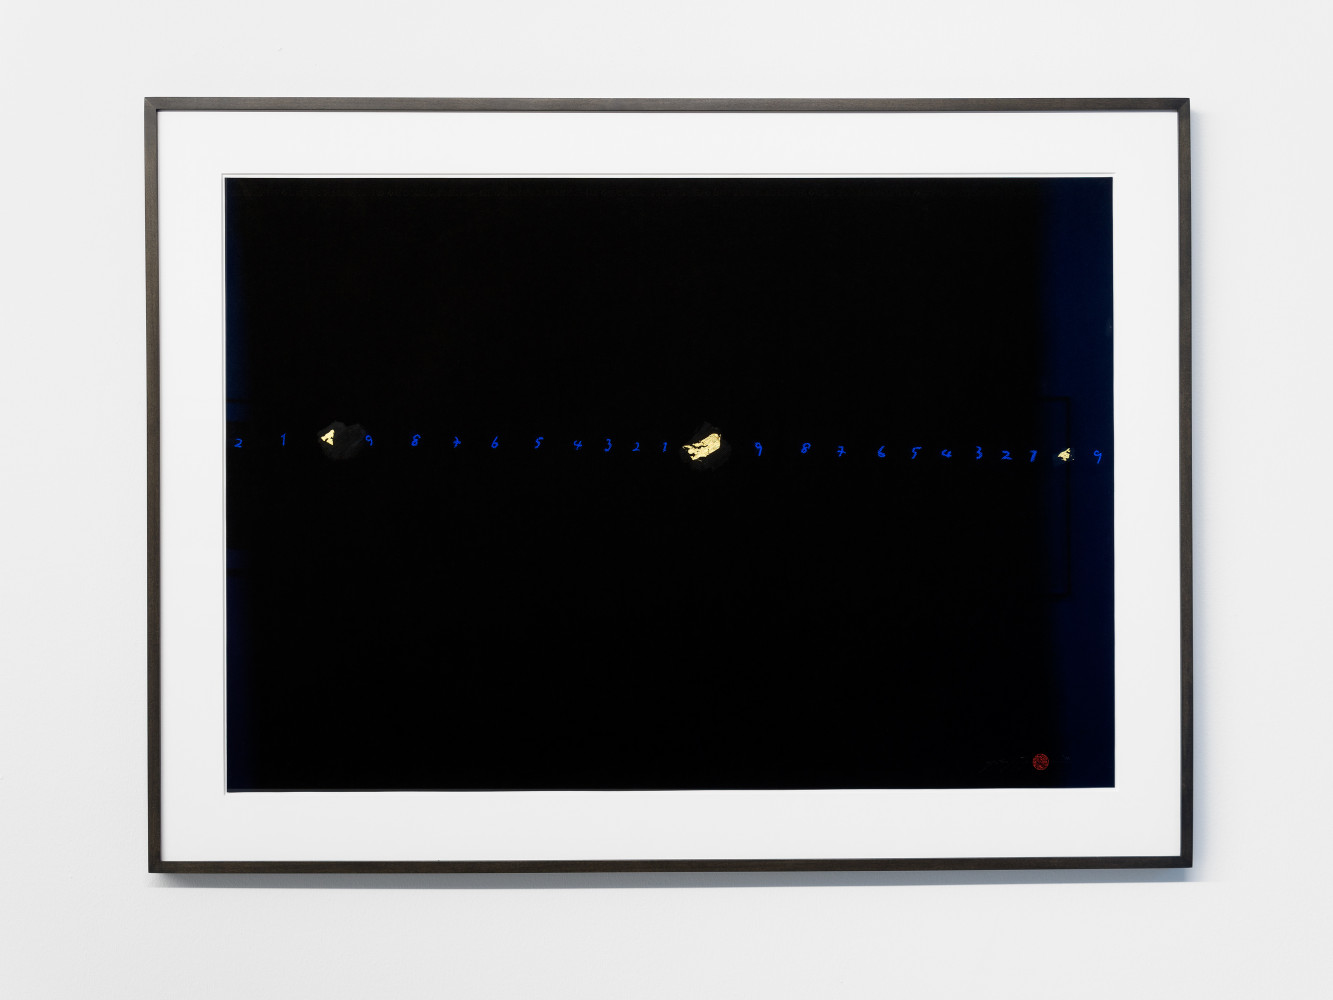 Tatsuo Miyajima, ‘Counting Gold’, 1995, Ink and gold on paper